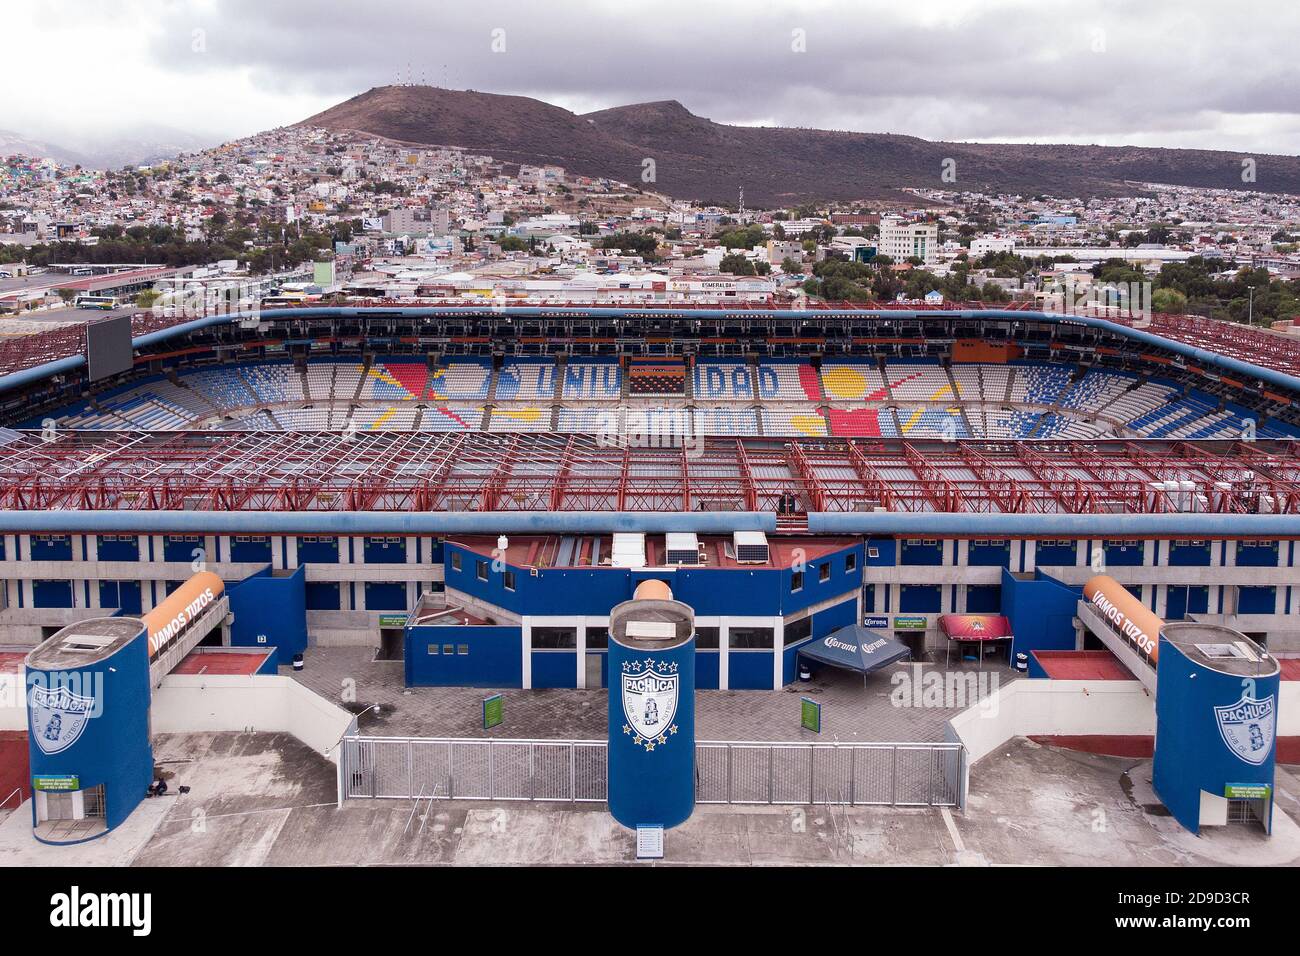 Aerial view of the Estadio Hidalgo, home of the Pachuca soccer team at Pachuca, Hidalgo, Mexico. Stock Photo